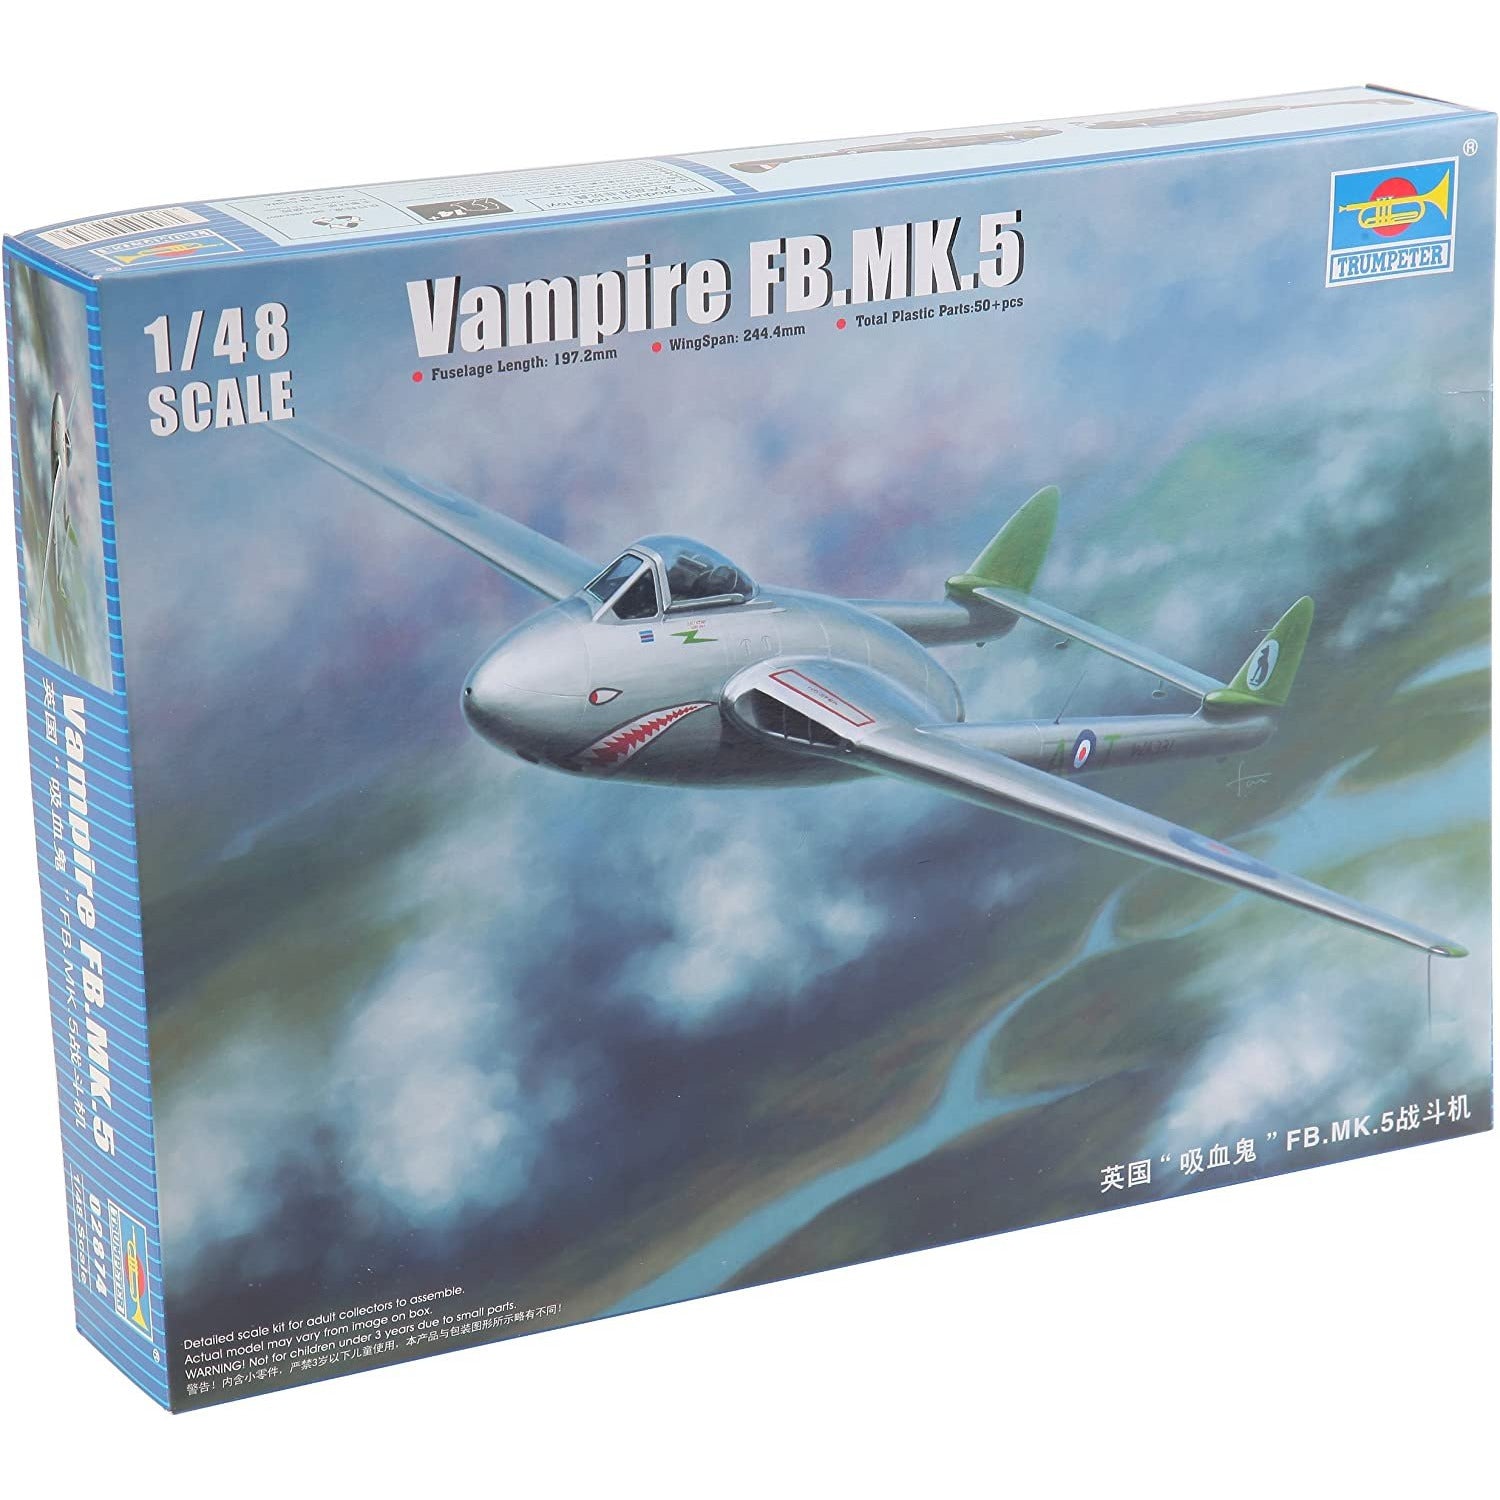 Vampire FB Mk 5 1/48 by Trumpeter